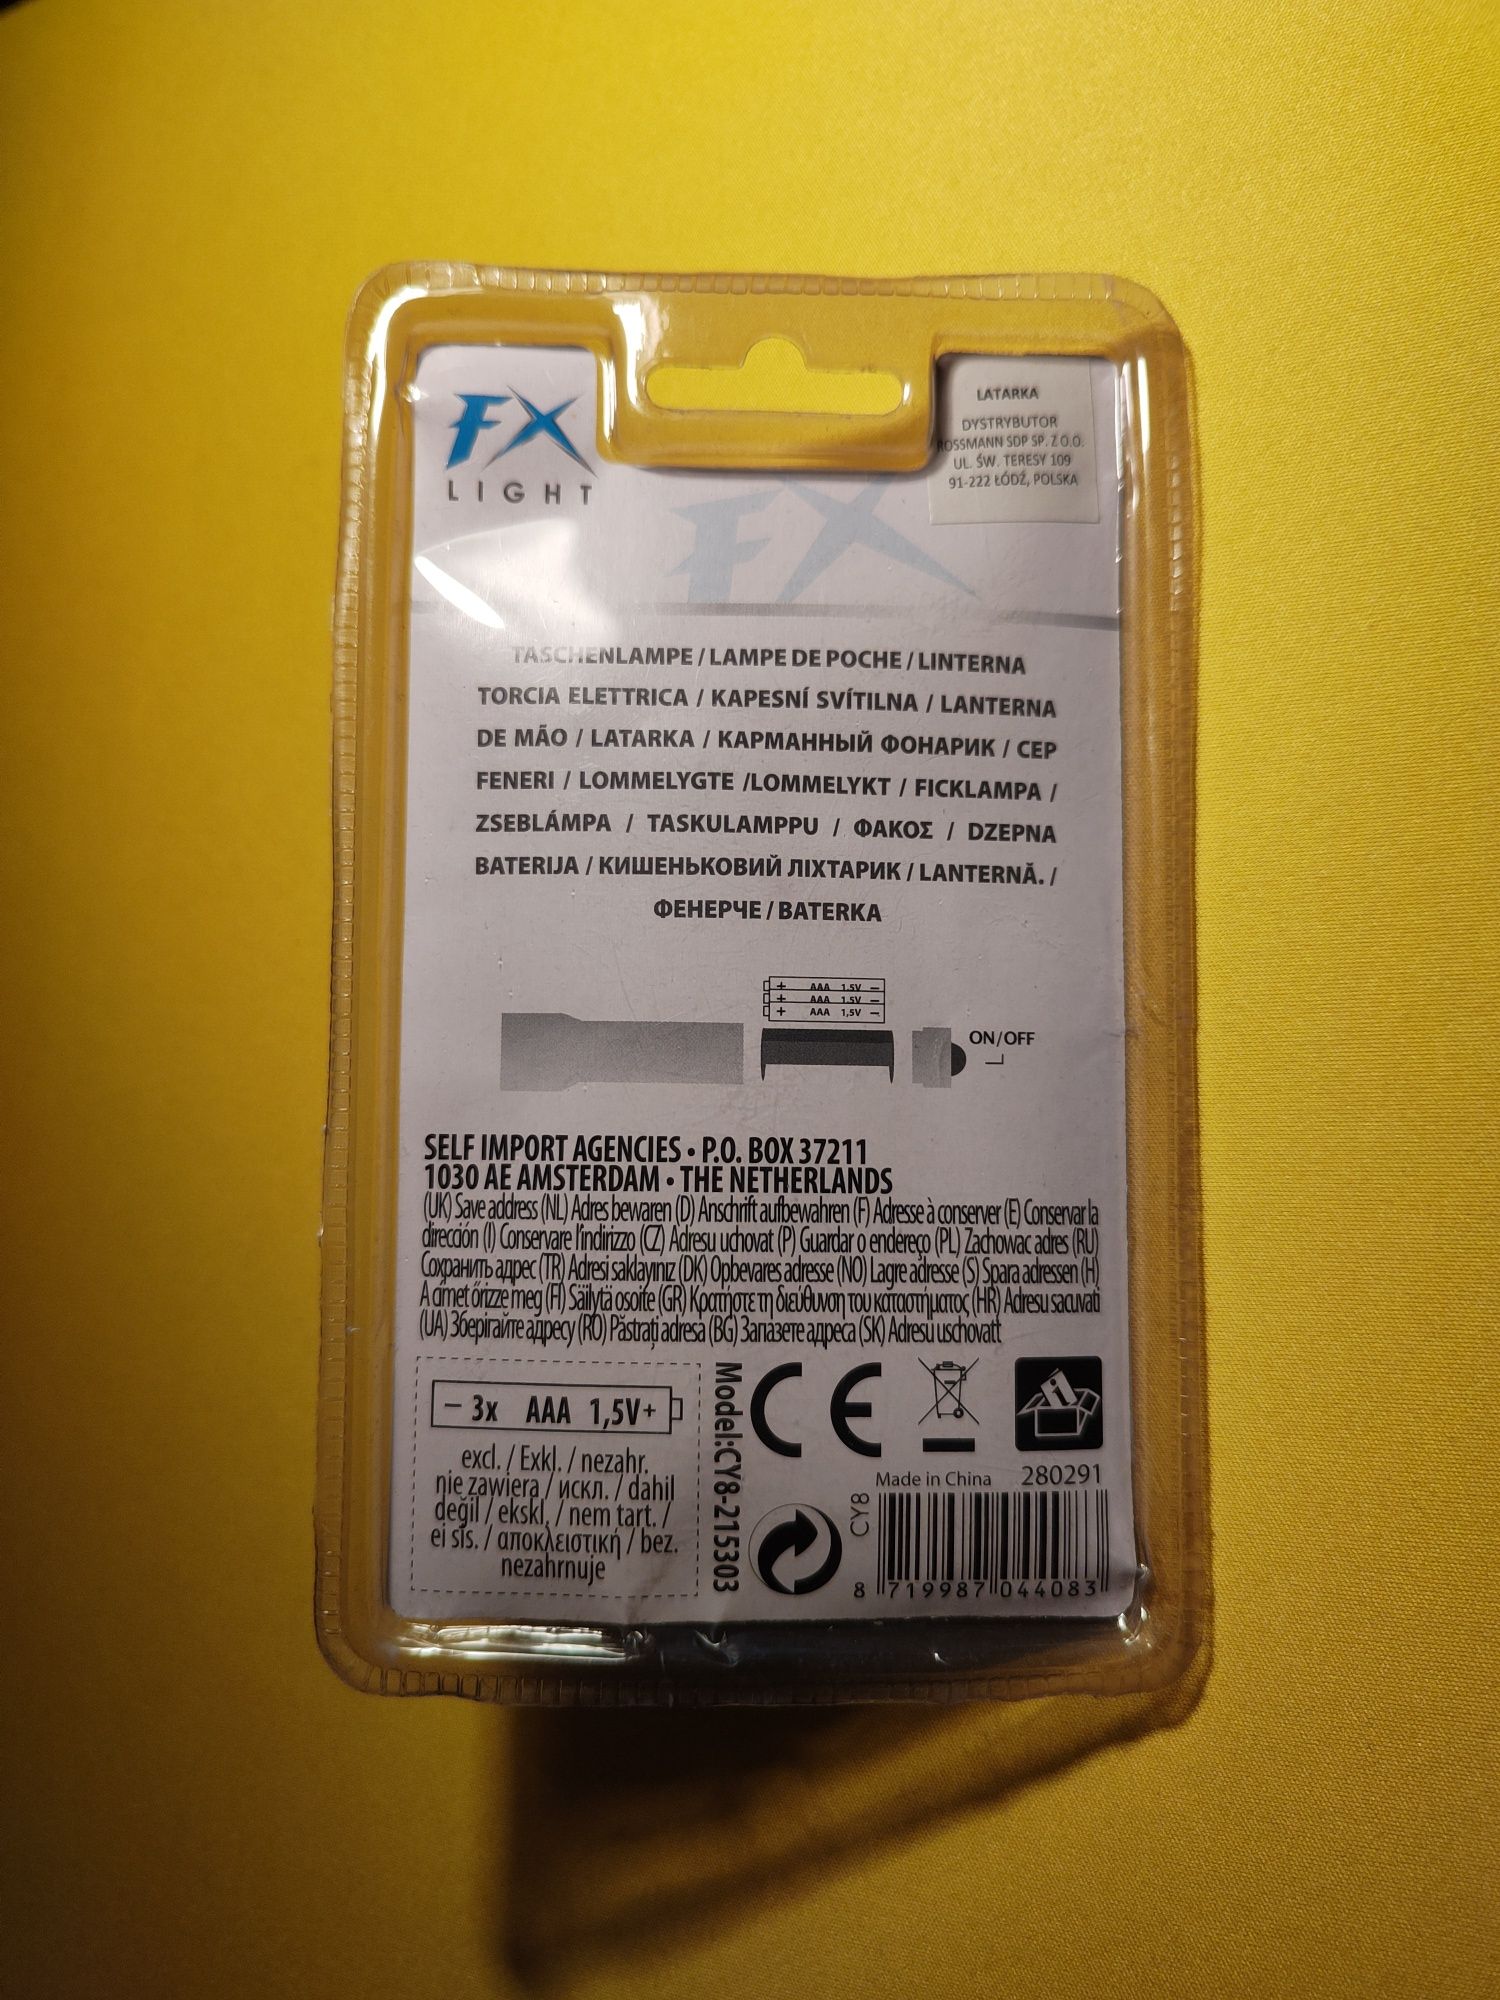 Mini latarka aluminiowa 9 LED marki FX Light